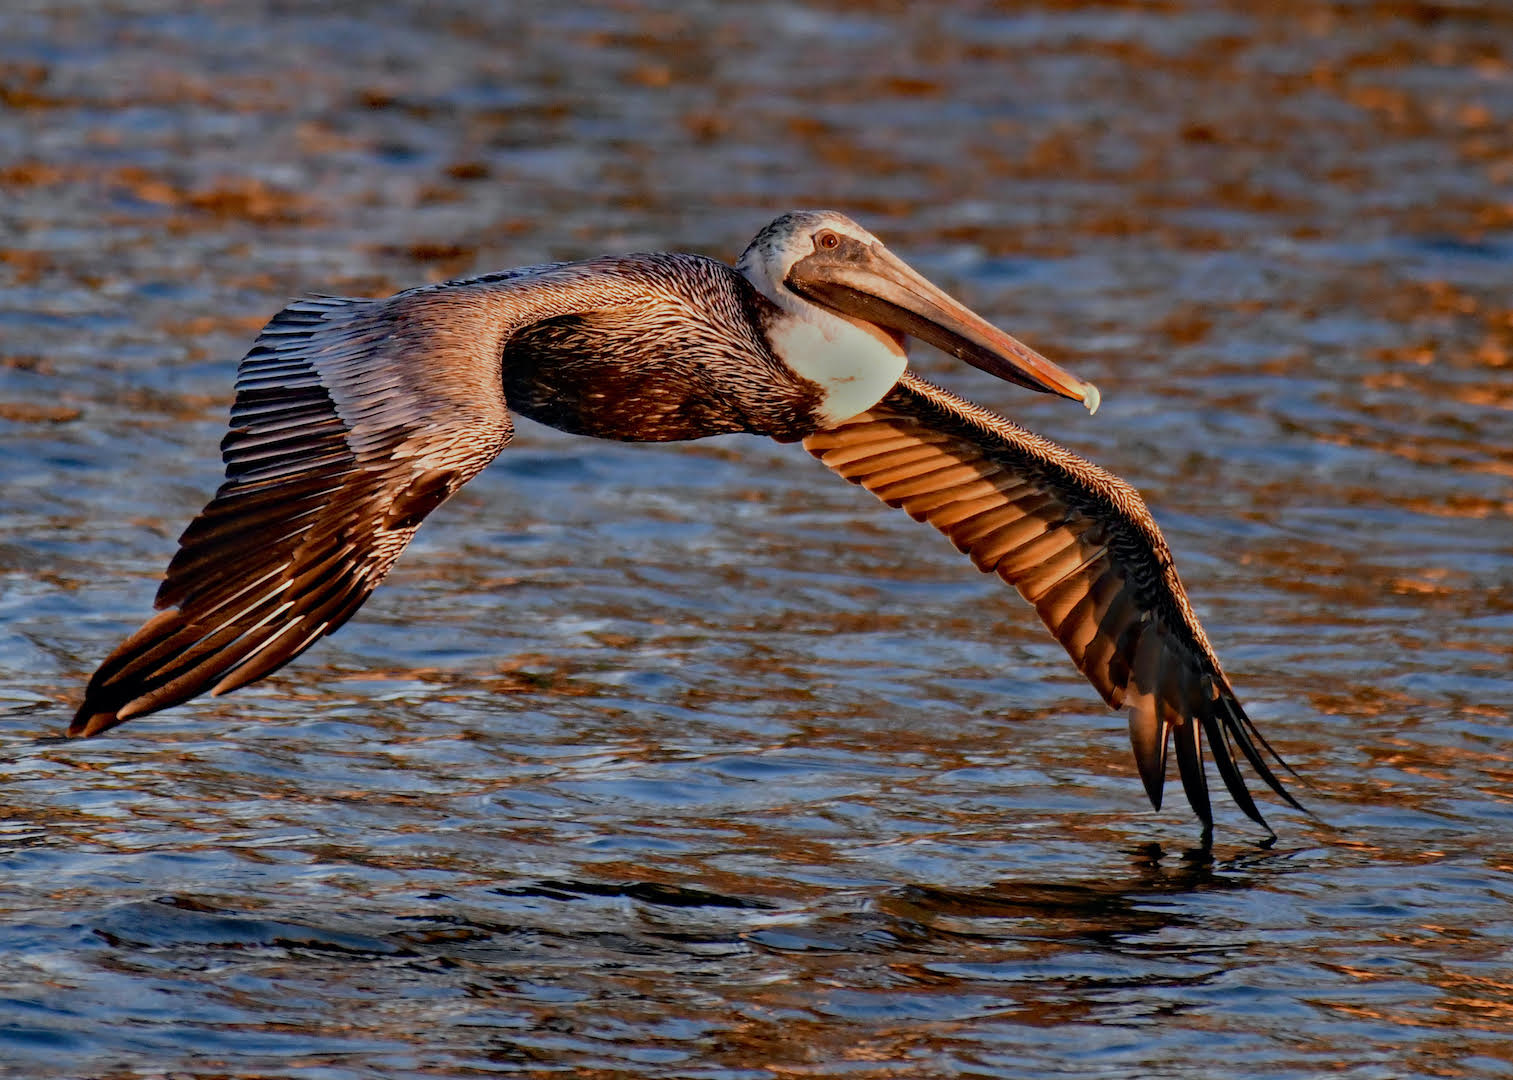 Pelican at Dusk by Tom Buckard